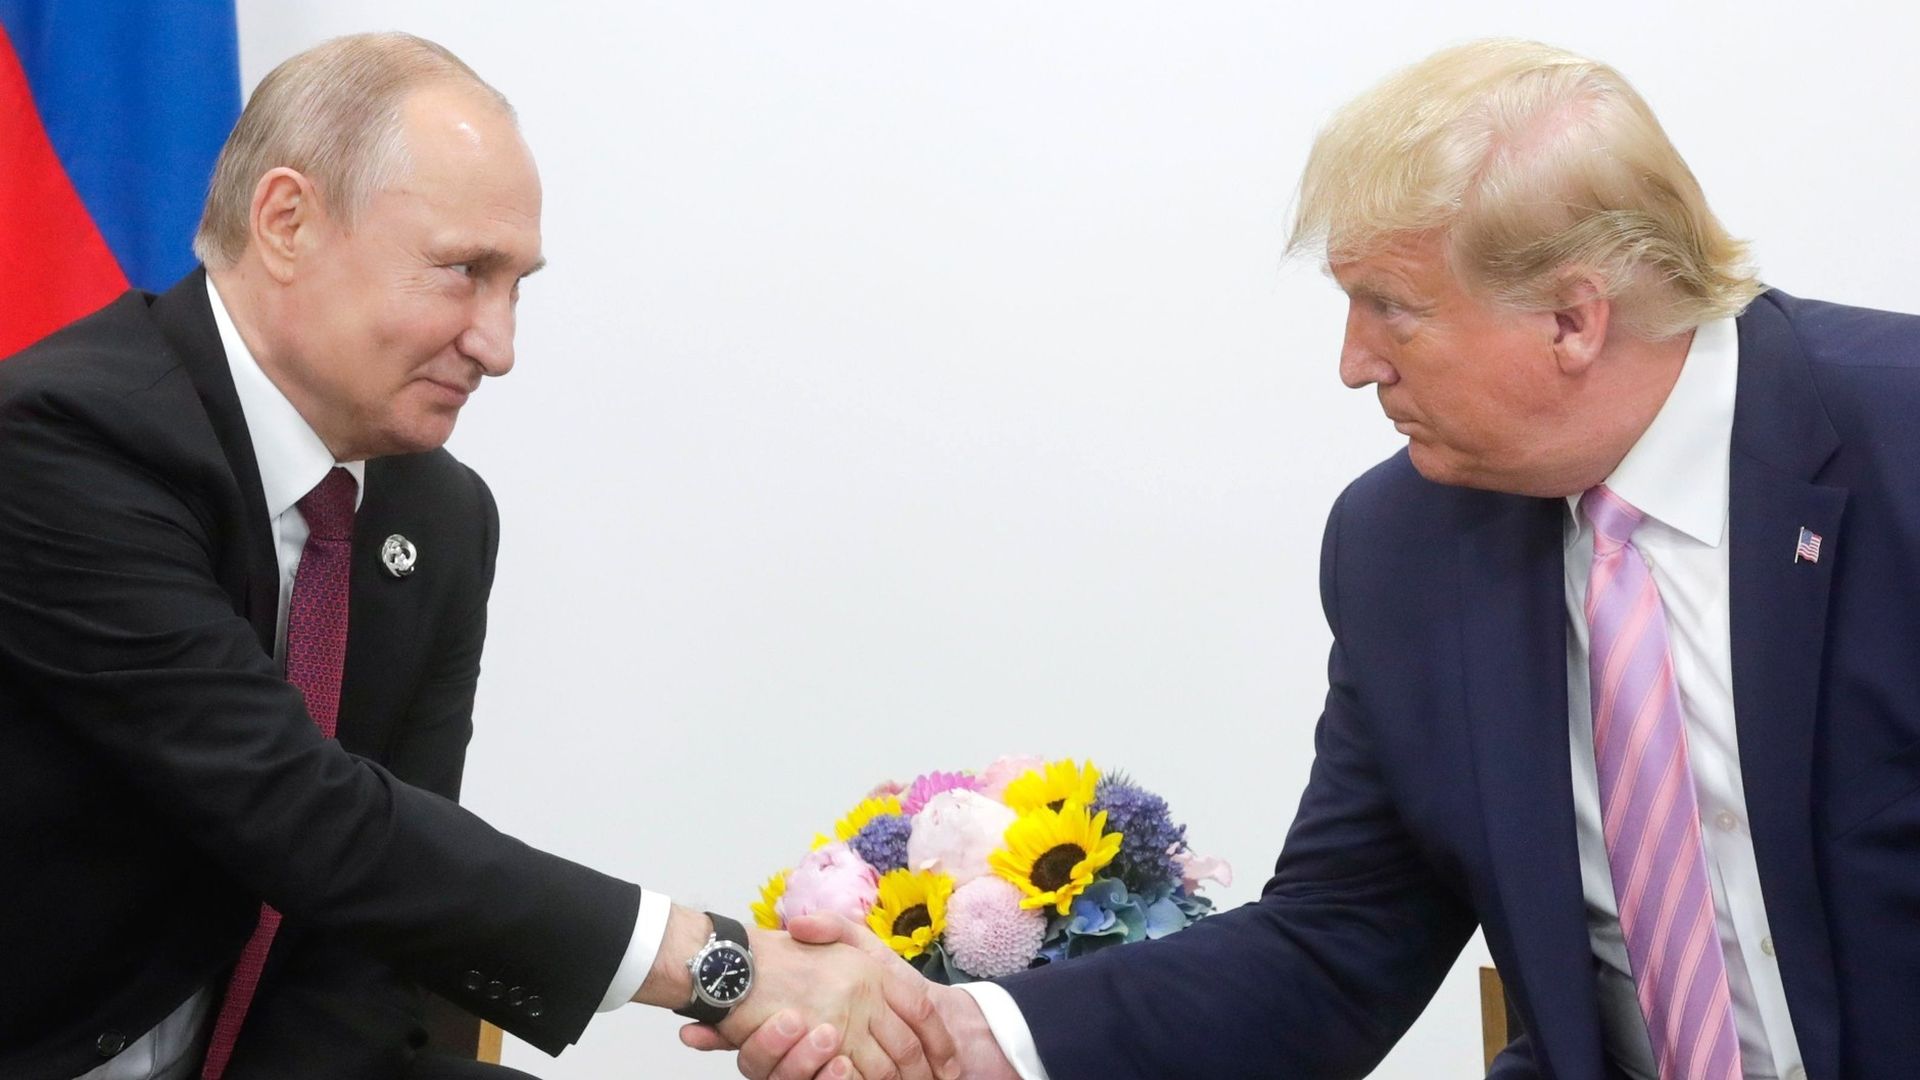 Russian President Vladimir Putin and President Trump